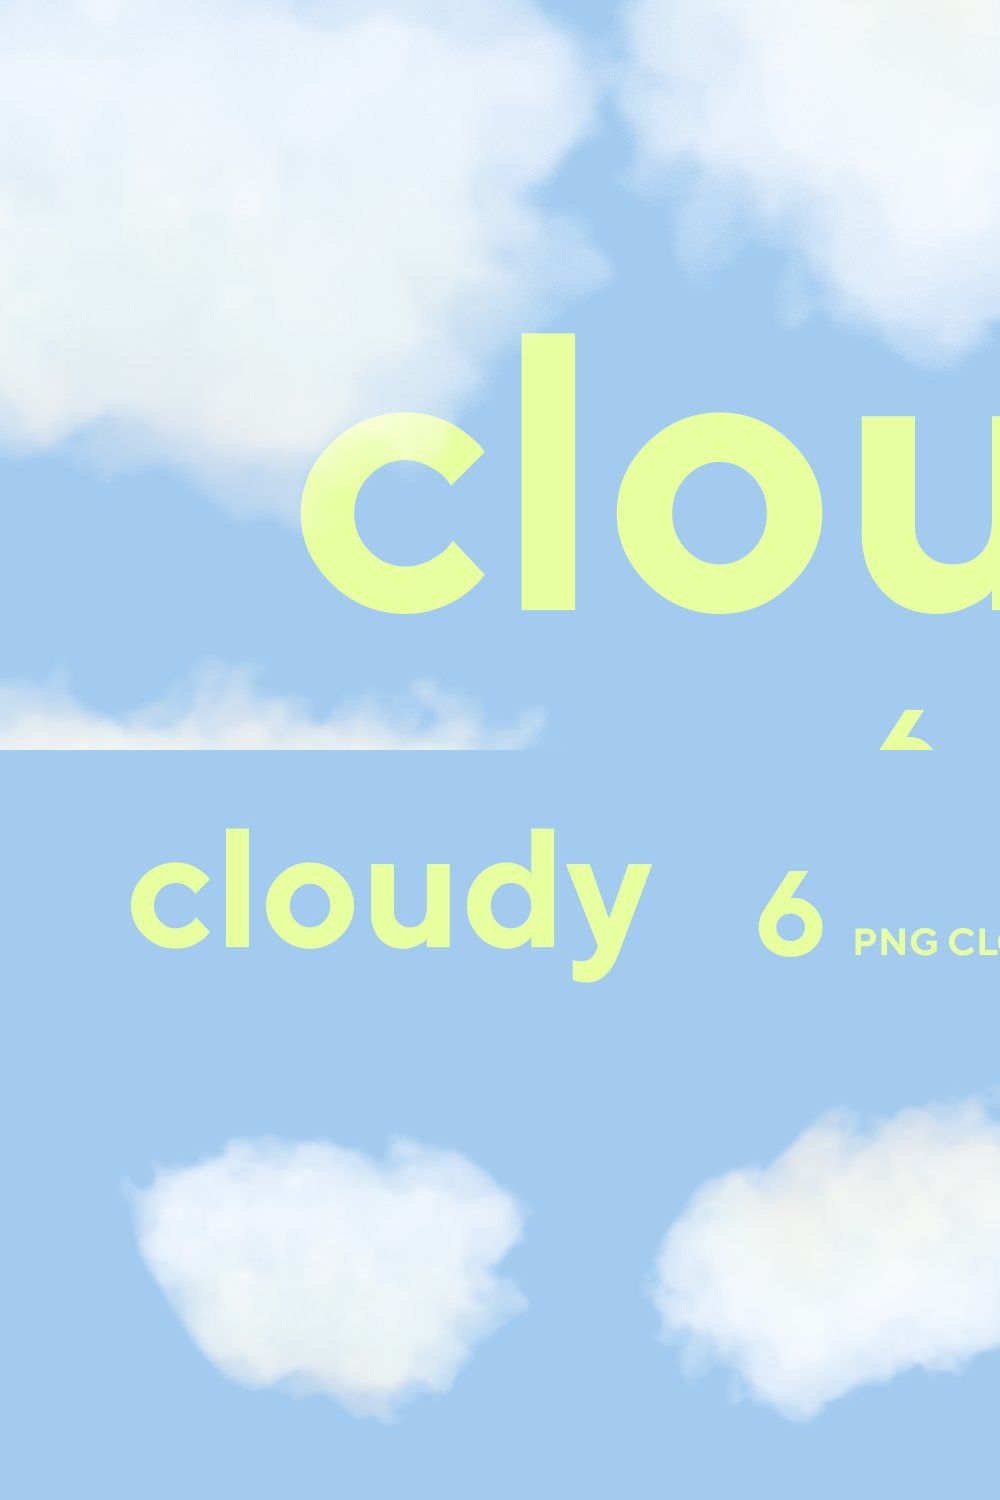 Cloudy - 6 PNG Cloud Textures pinterest preview image.